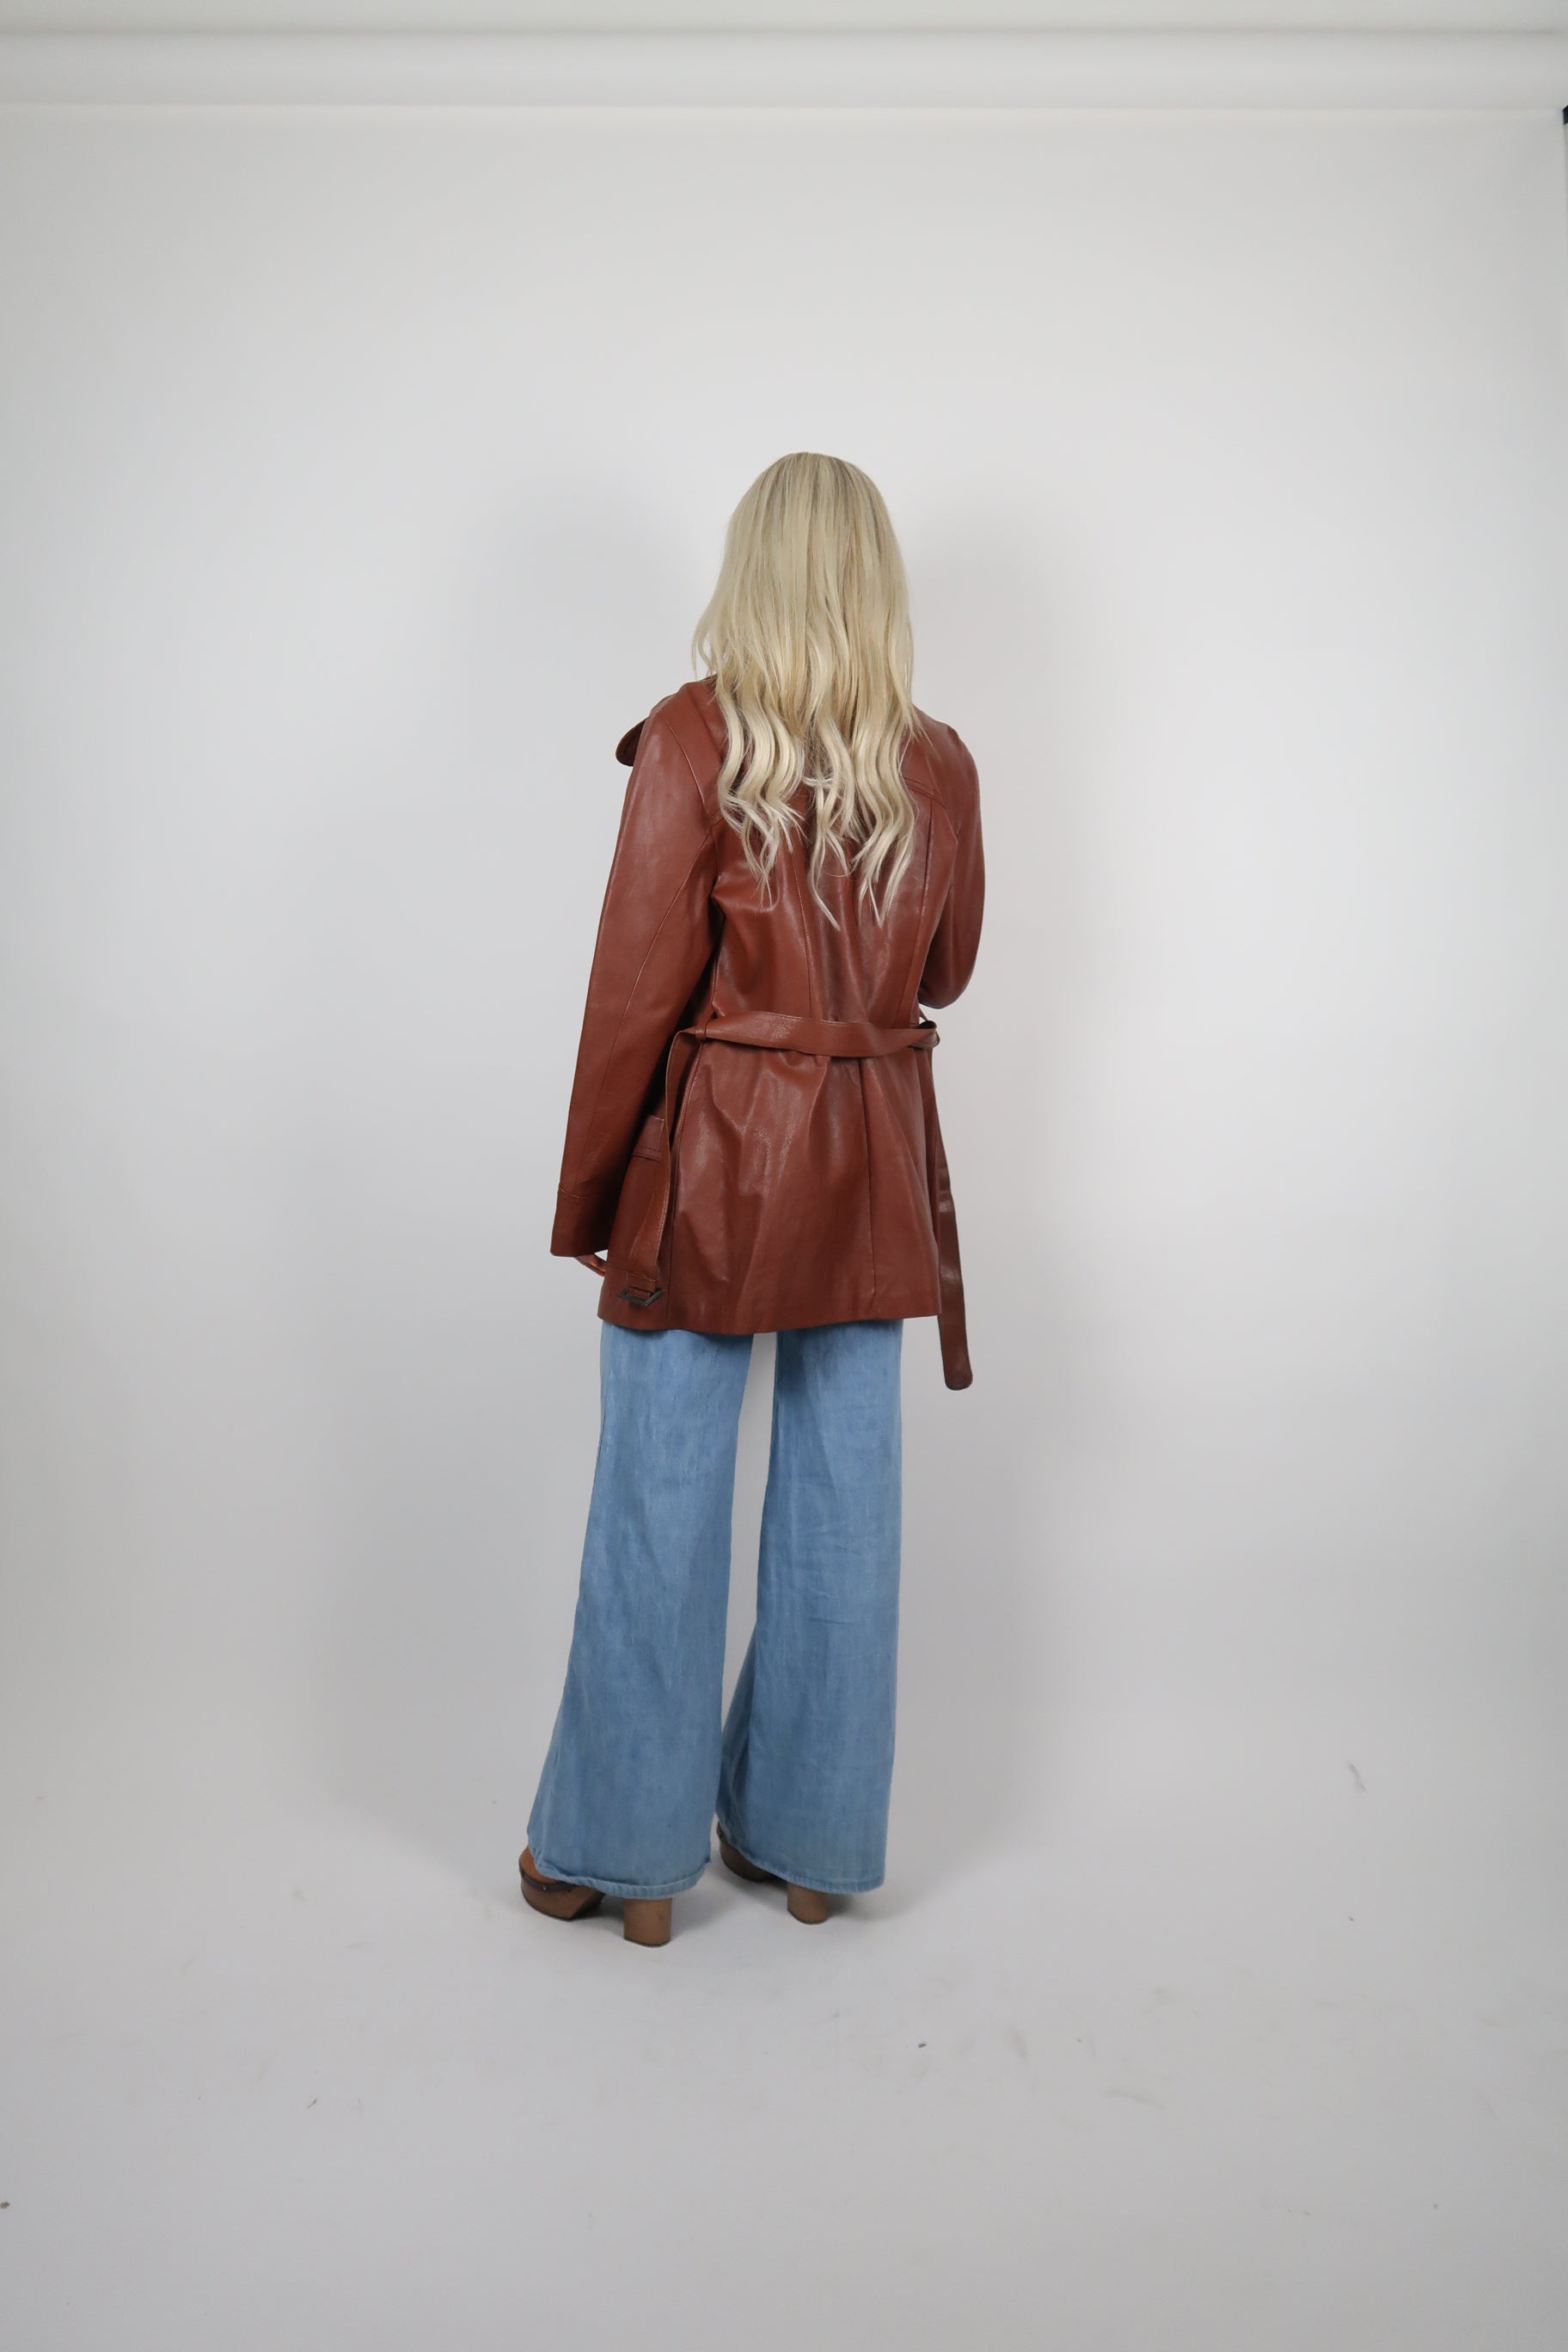 70s Burgundy Leather Jacket - Rock the Jumpsuit